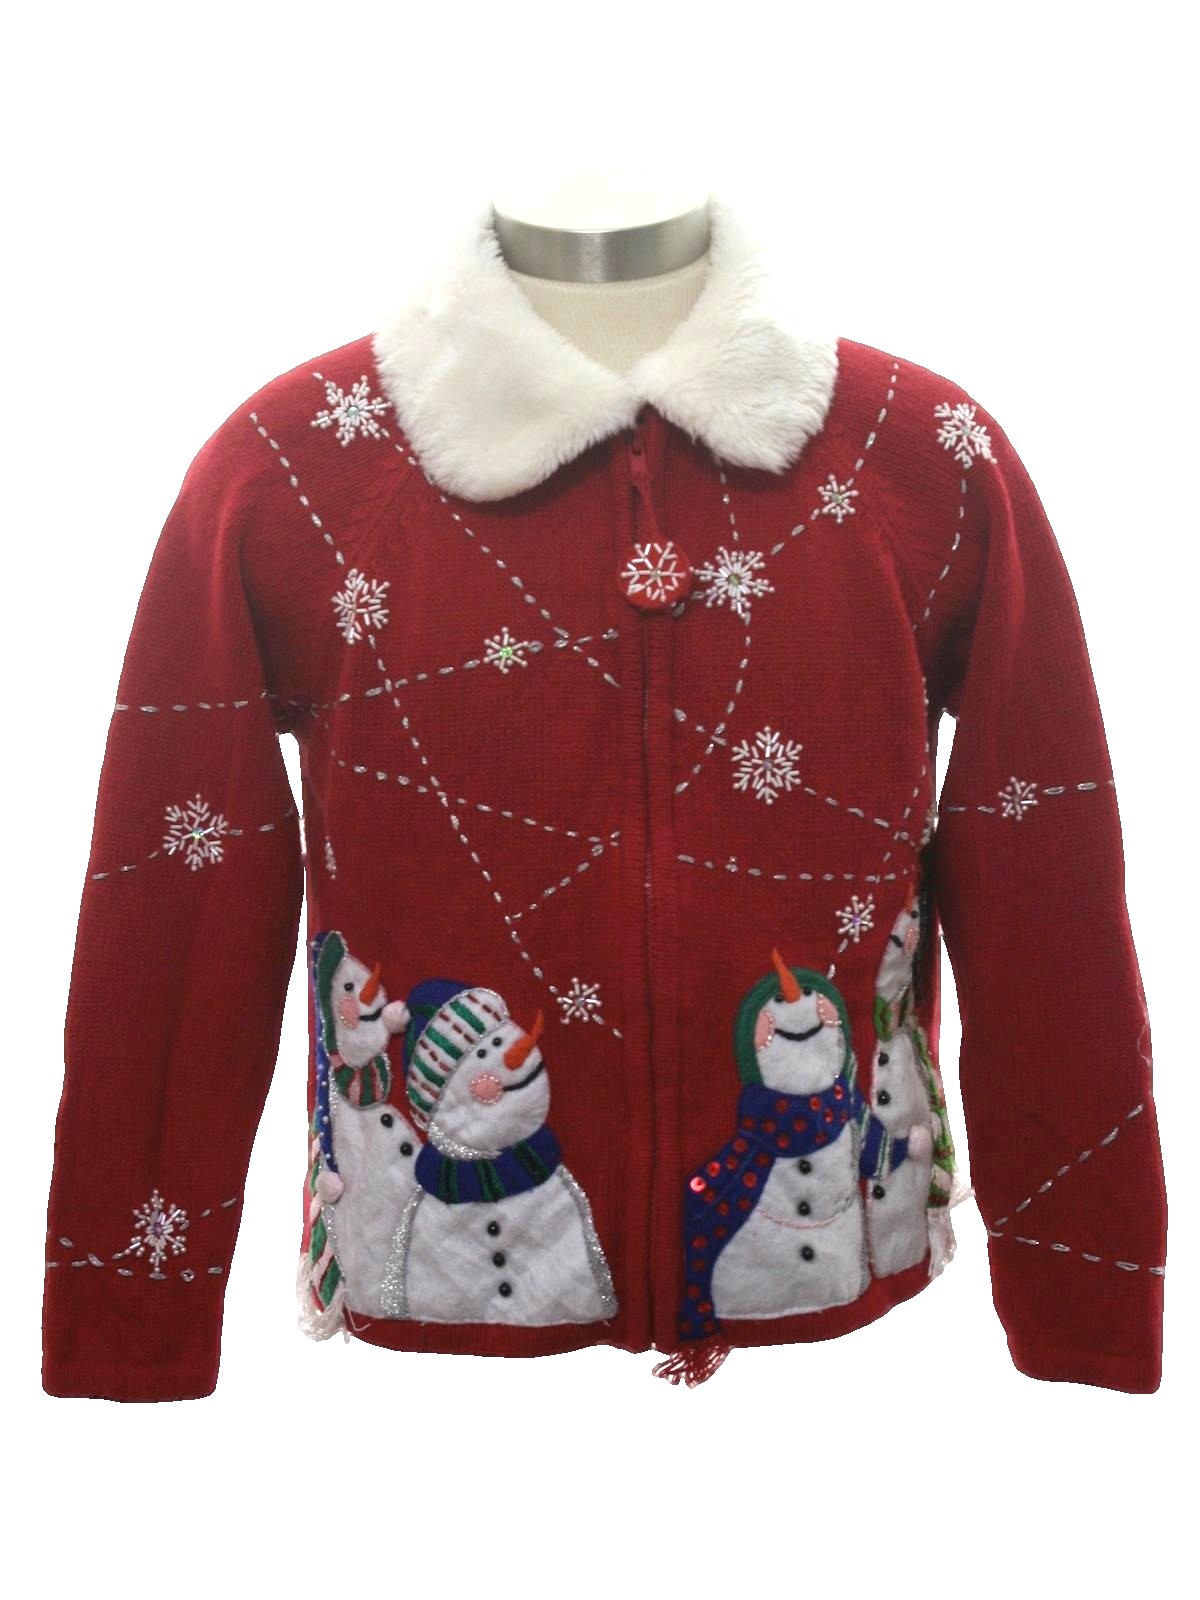 Womens or Girls Ugly Christmas Sweater: -Tiara International- Petite